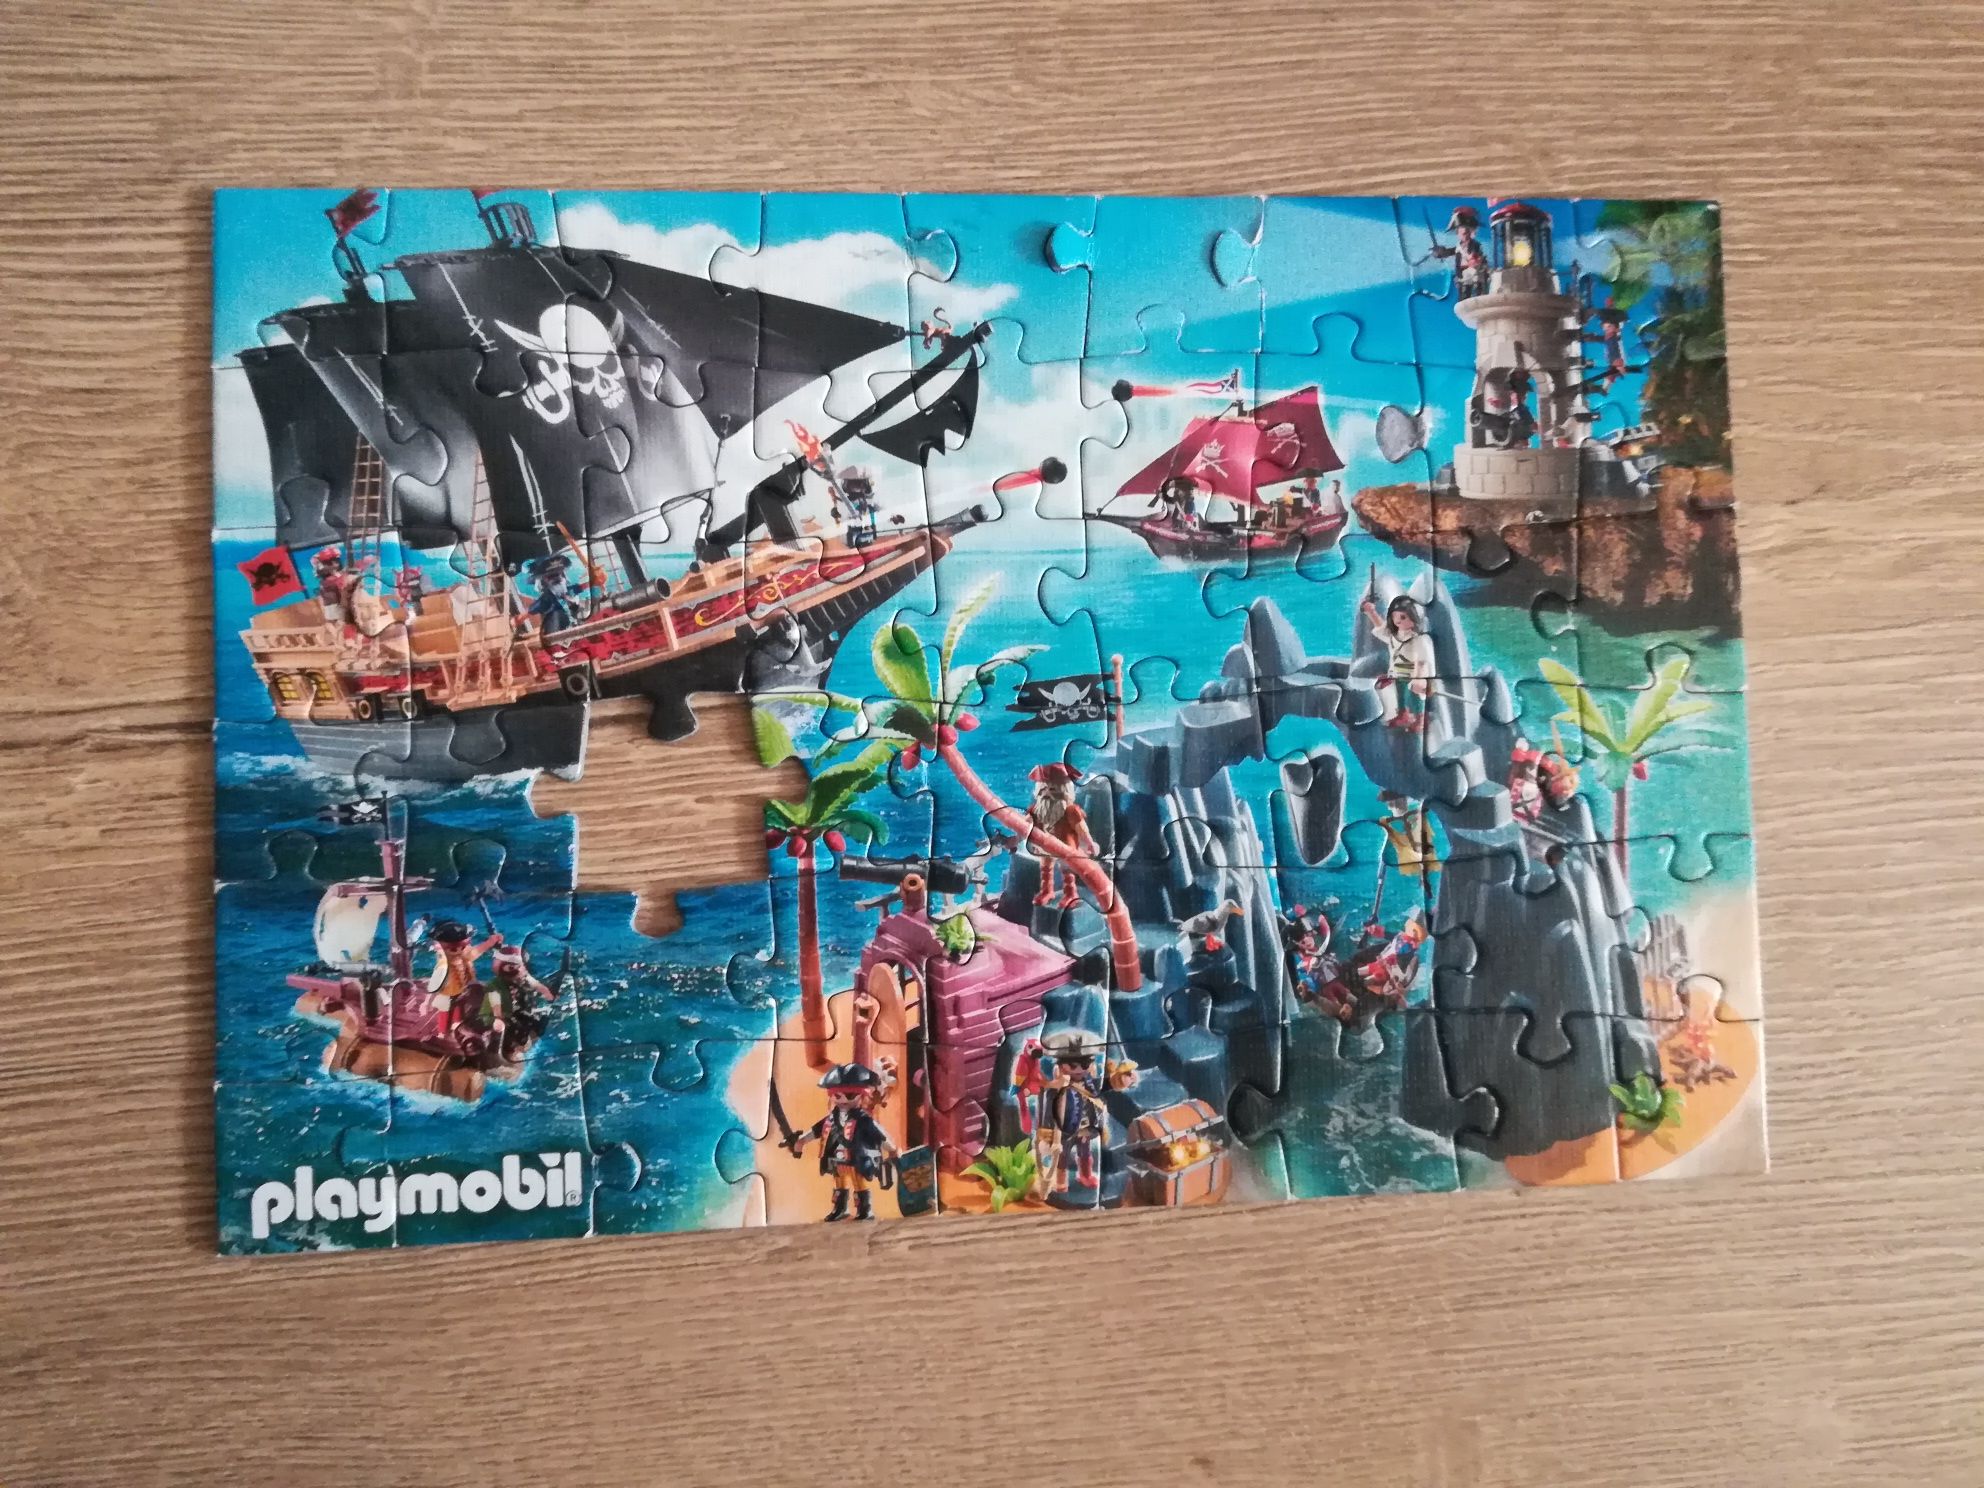 PLAYMOBIL puzzle 20x15